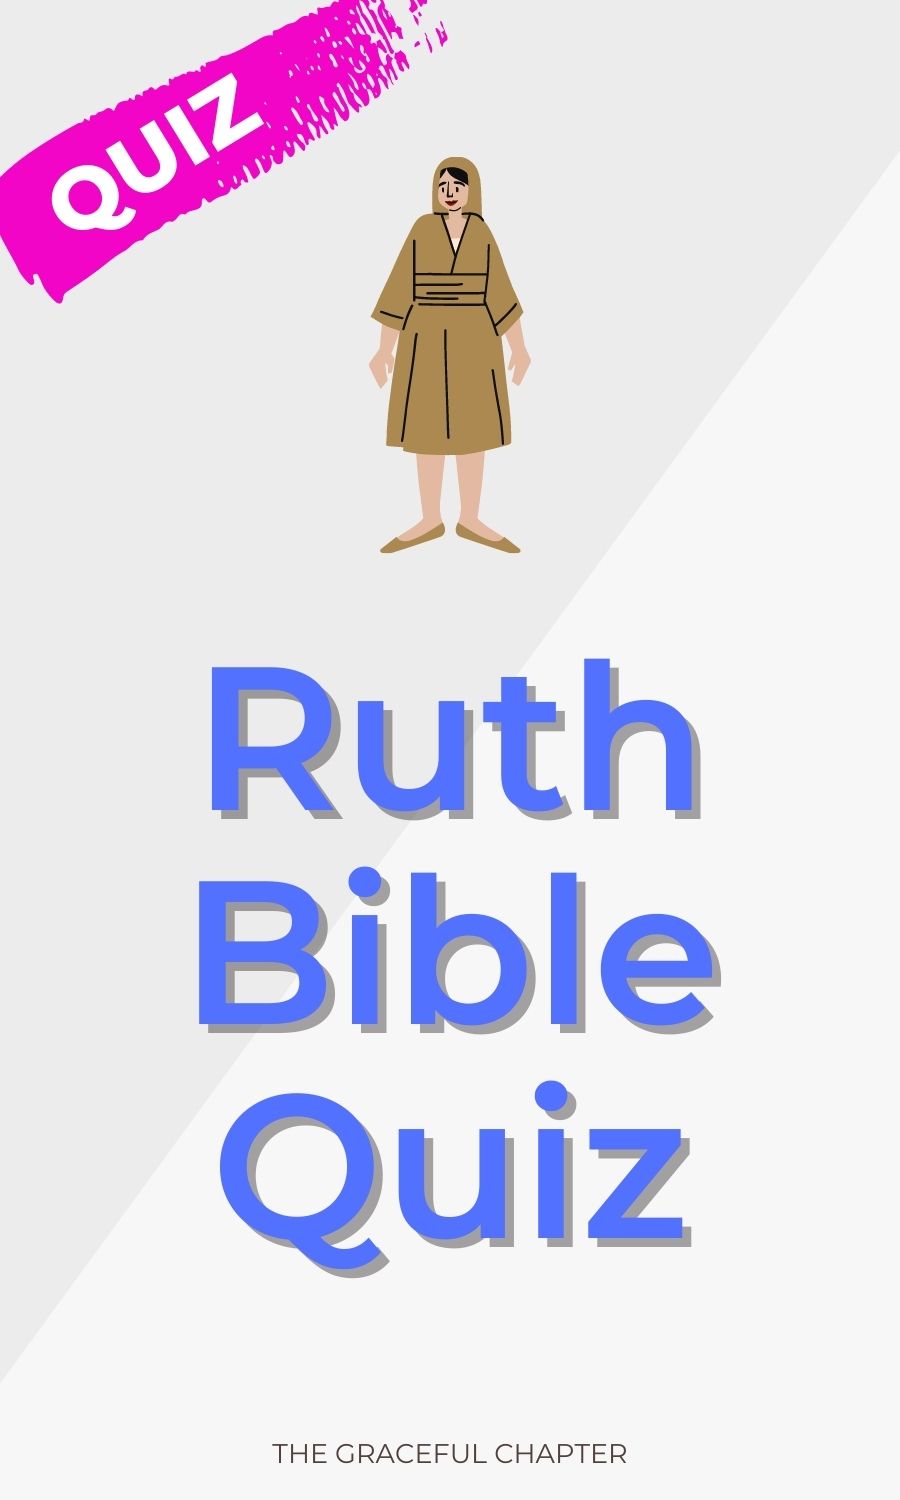 Ruth bible quiz